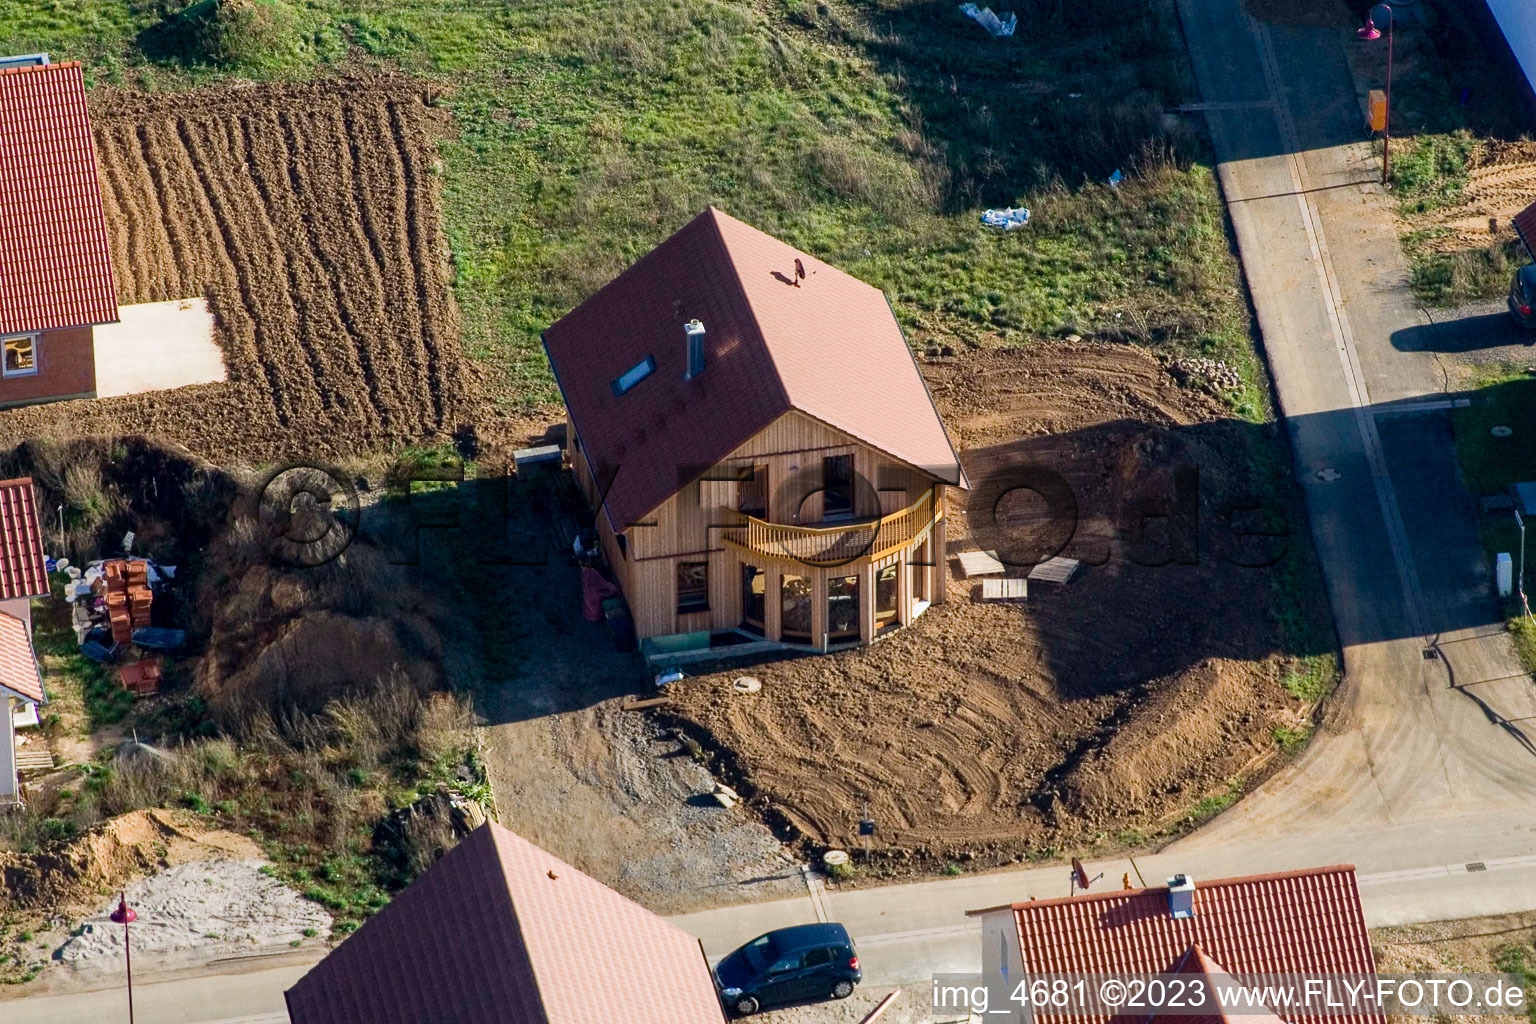 Drone recording of Brotäcker new development area in Steinweiler in the state Rhineland-Palatinate, Germany